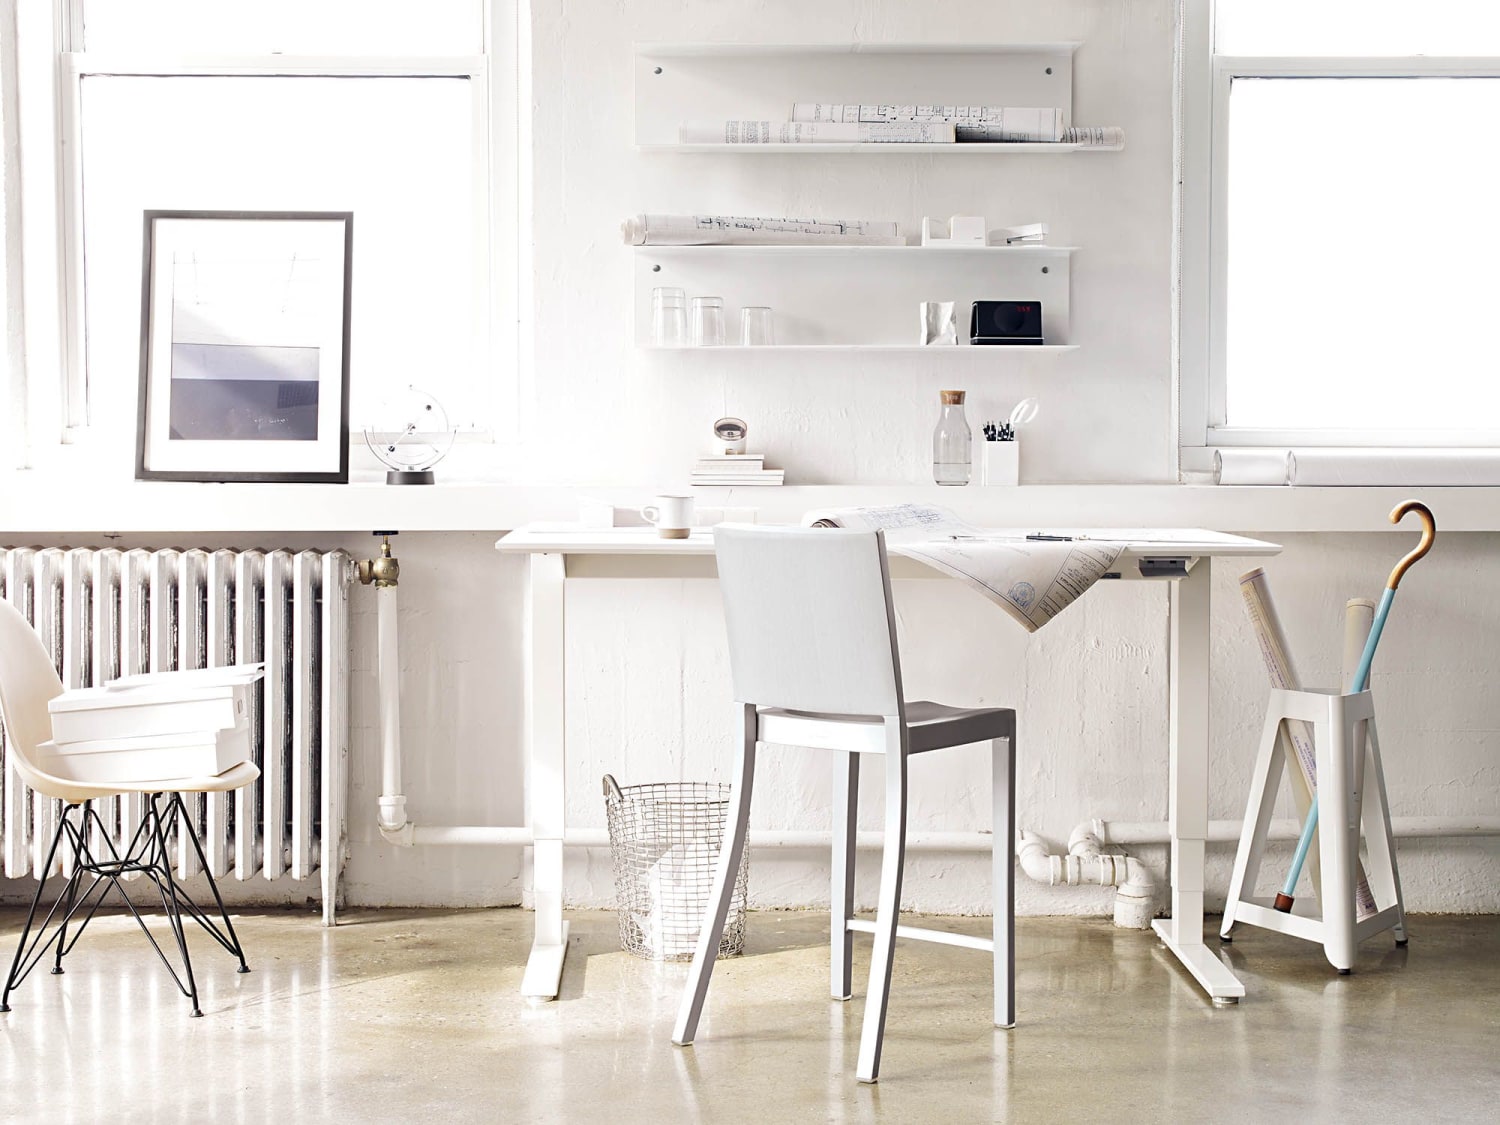 Float Adjustable-Height Table | Designed by Humanscale. | Adjustable height table, Home office furniture, Workspace design